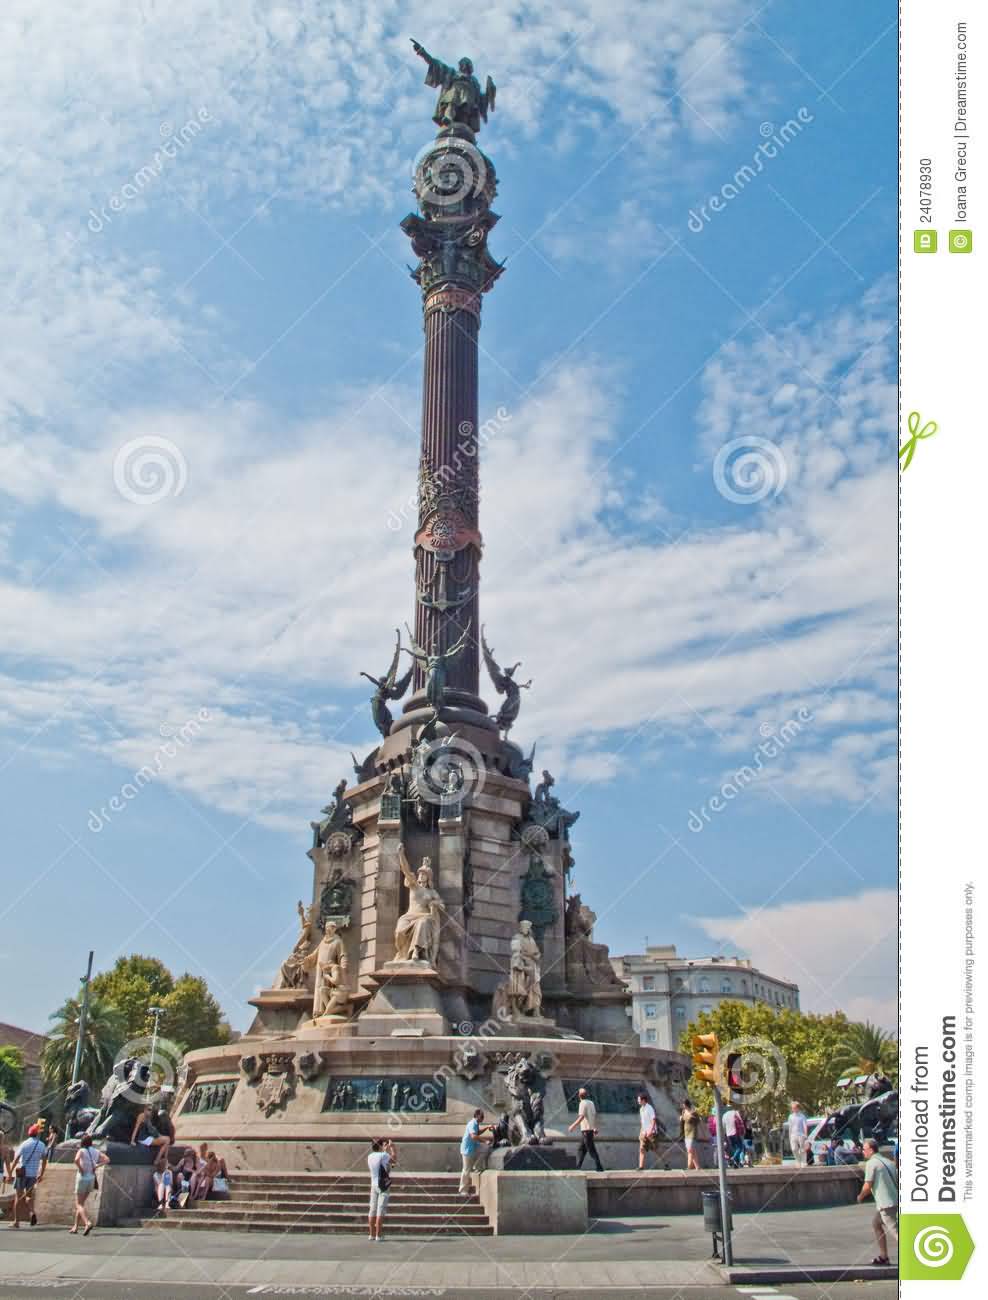 Columbus Monument In Barcelona